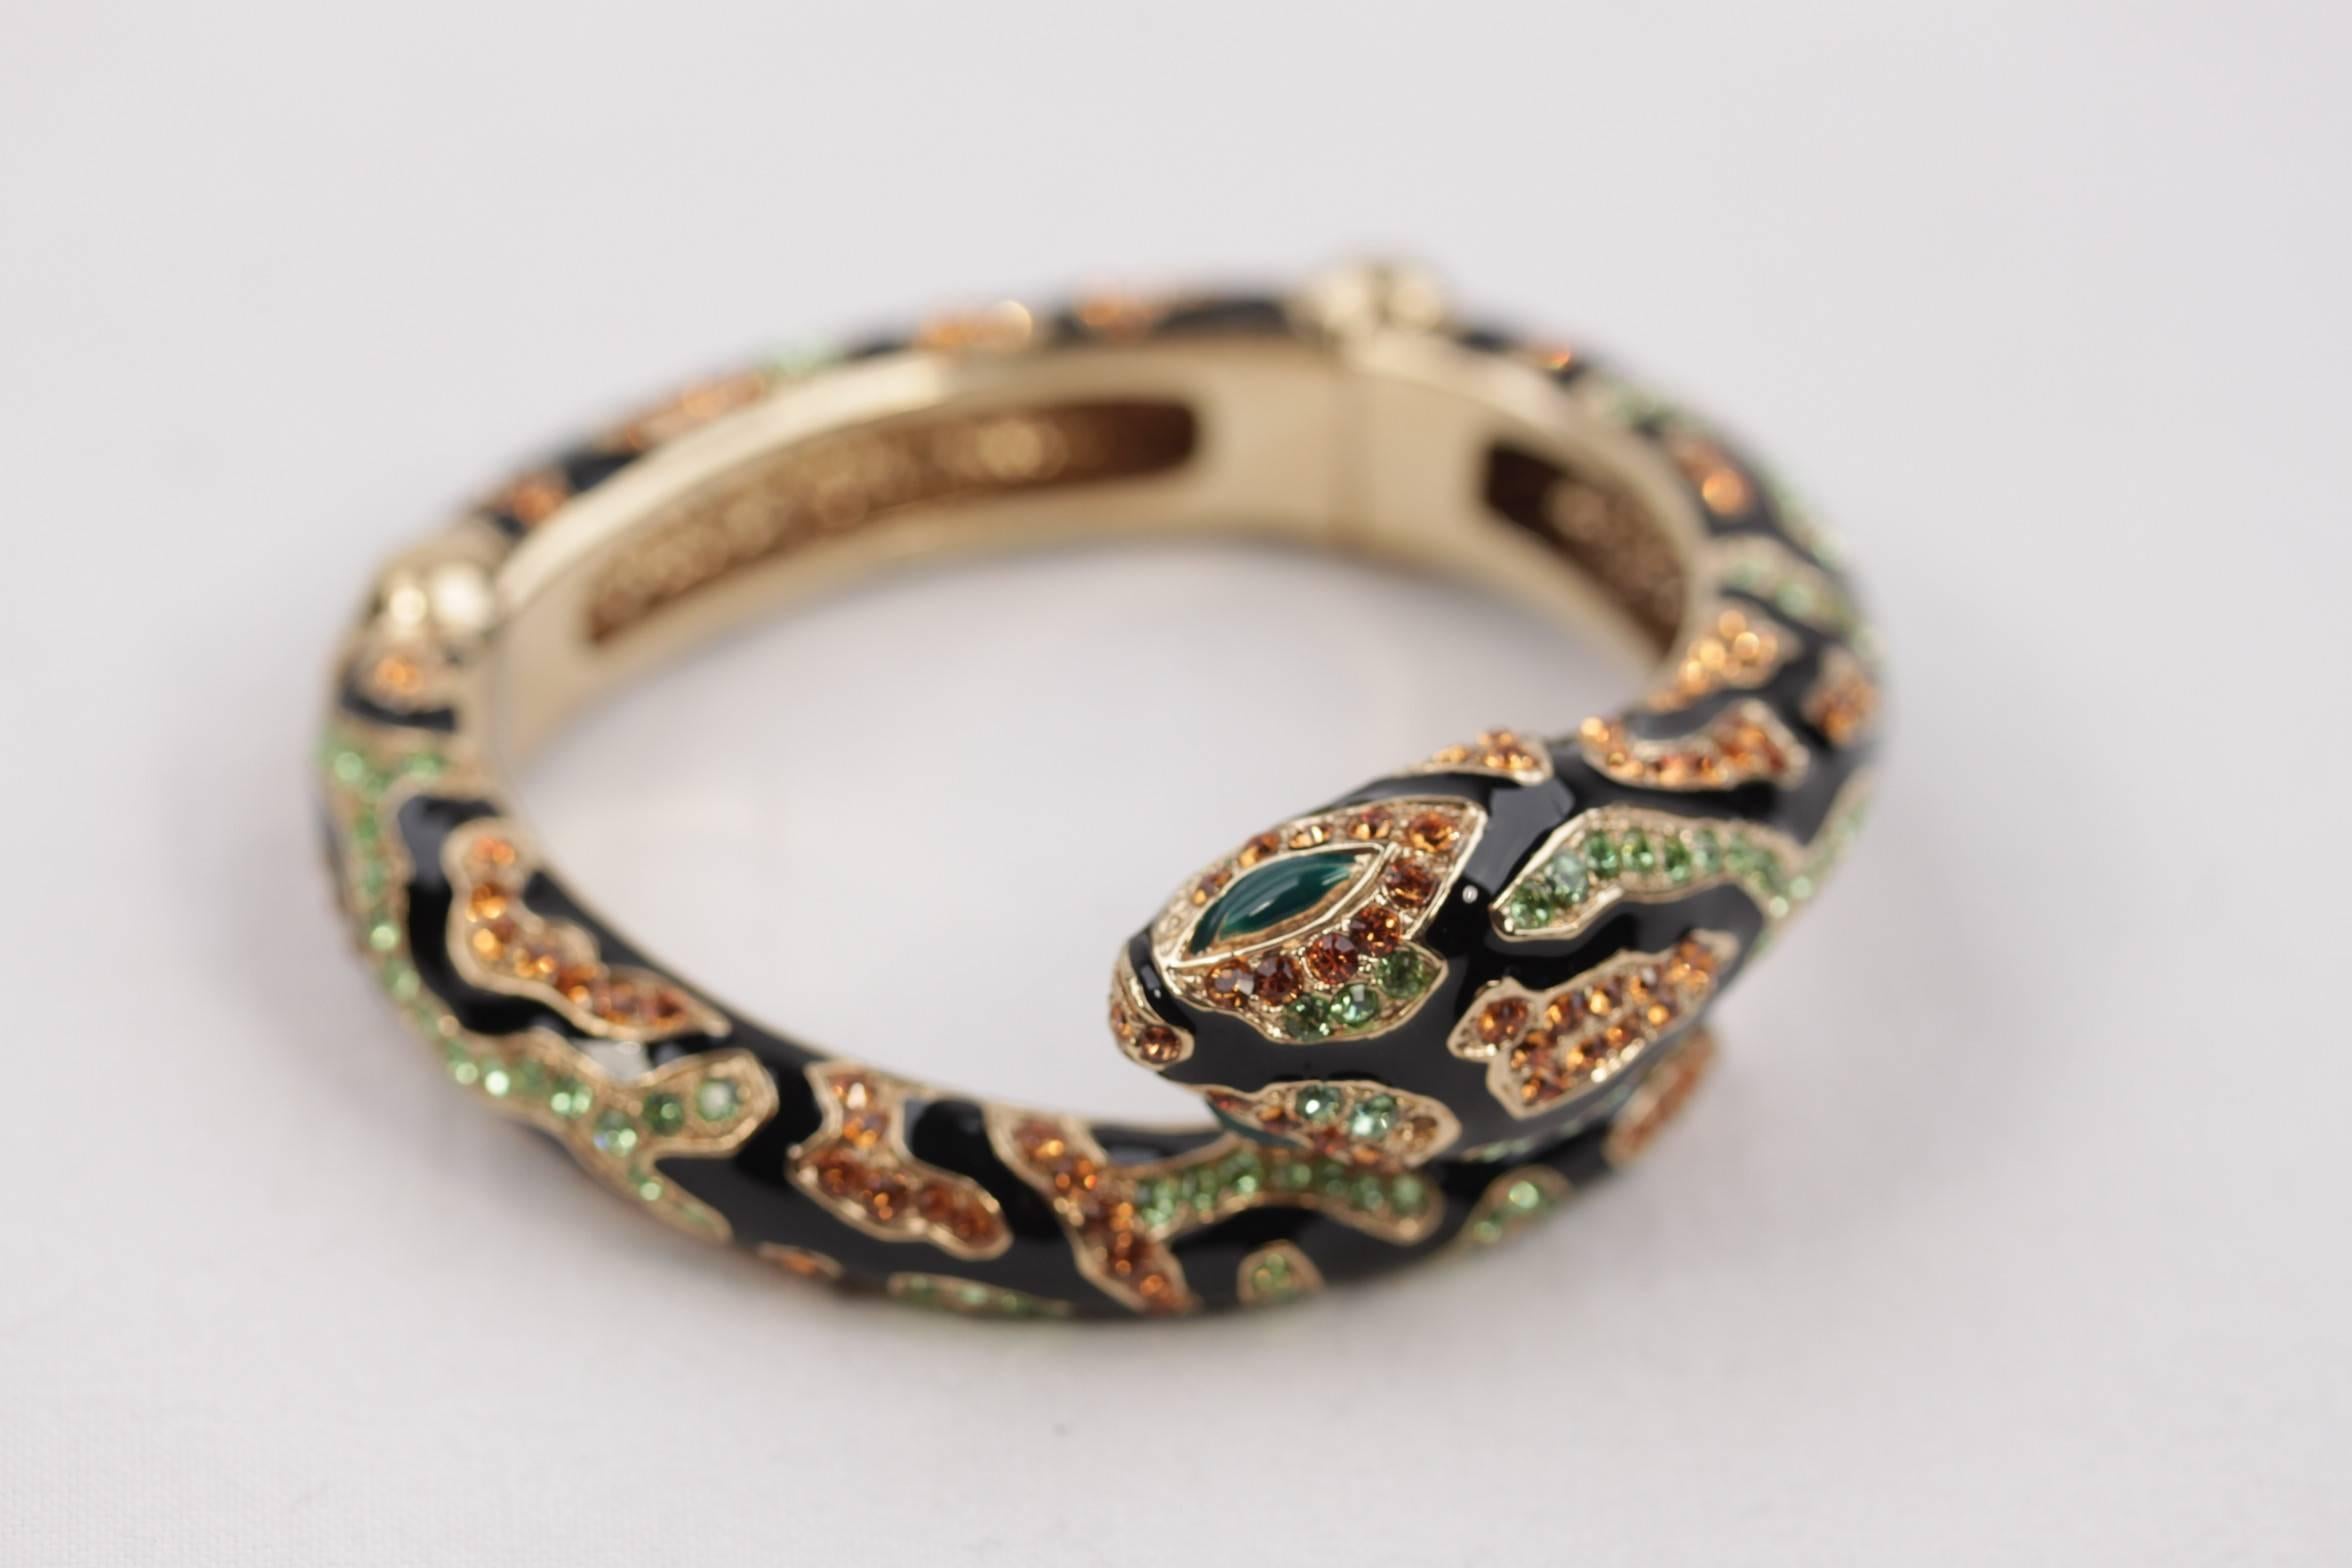 - Gold-tone brass 'Snake' bracelet with black enamel by ROBERTO CAVALLI

- With Orange & Green crystal embellishment.

- Green enameled eyes eyes

- 2 hinges to slip on

- Approx. inner diameter: 2 1/4 inches - 5,7 cm

- Marked 'ROBERTO